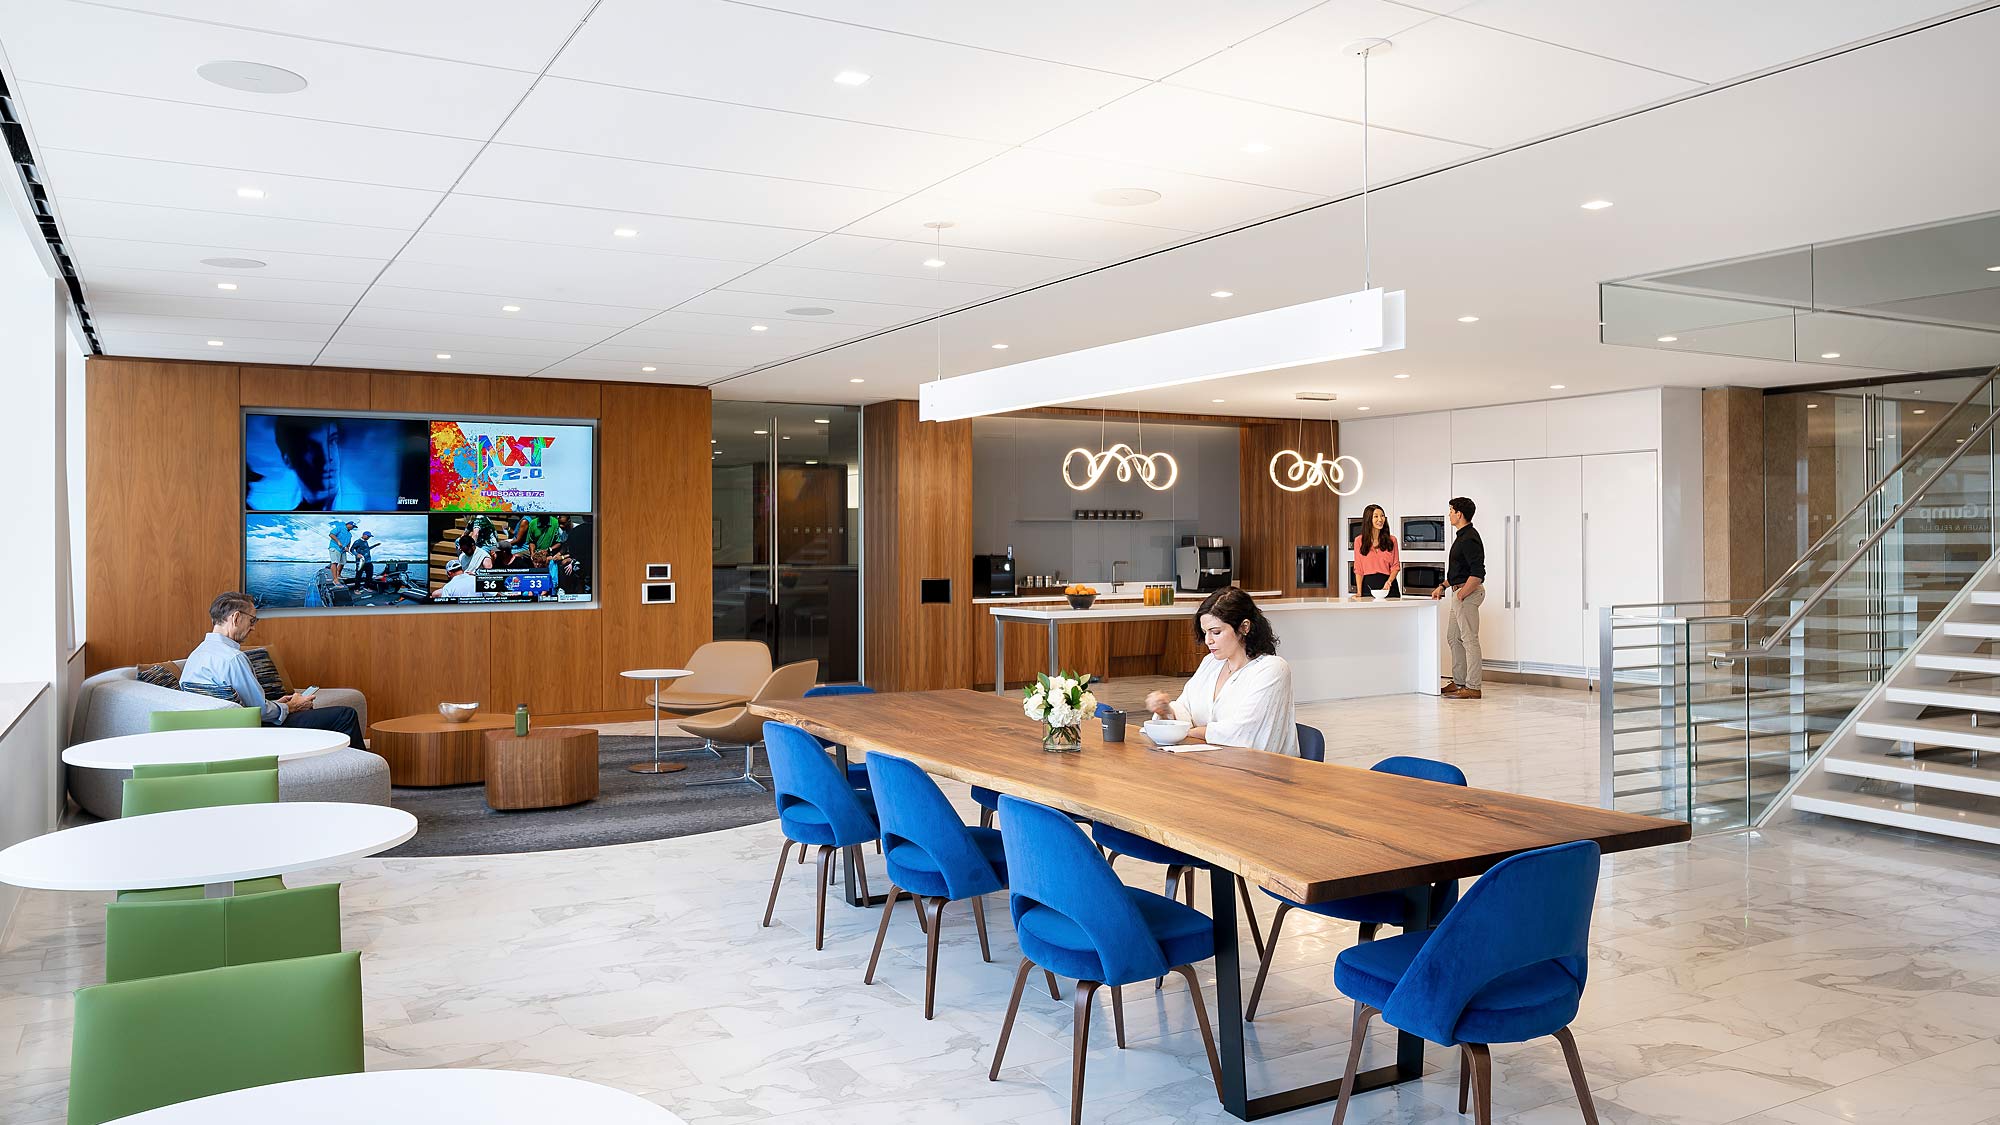 10 Simply Amazing New York City Offices - Interior Design